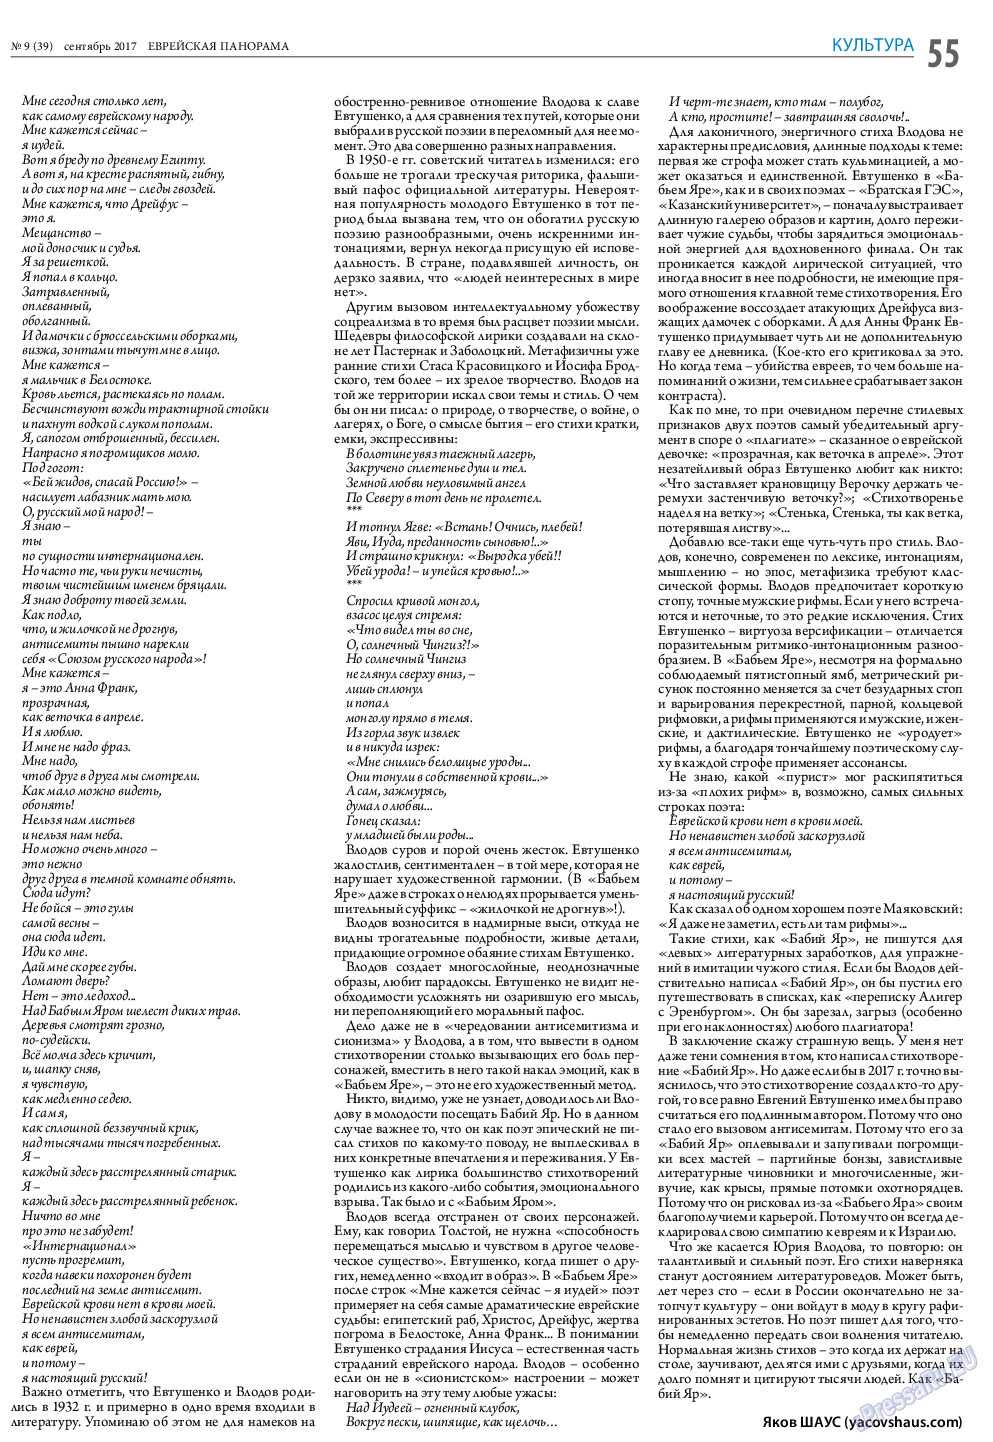 Еврейская панорама, газета. 2017 №9 стр.55